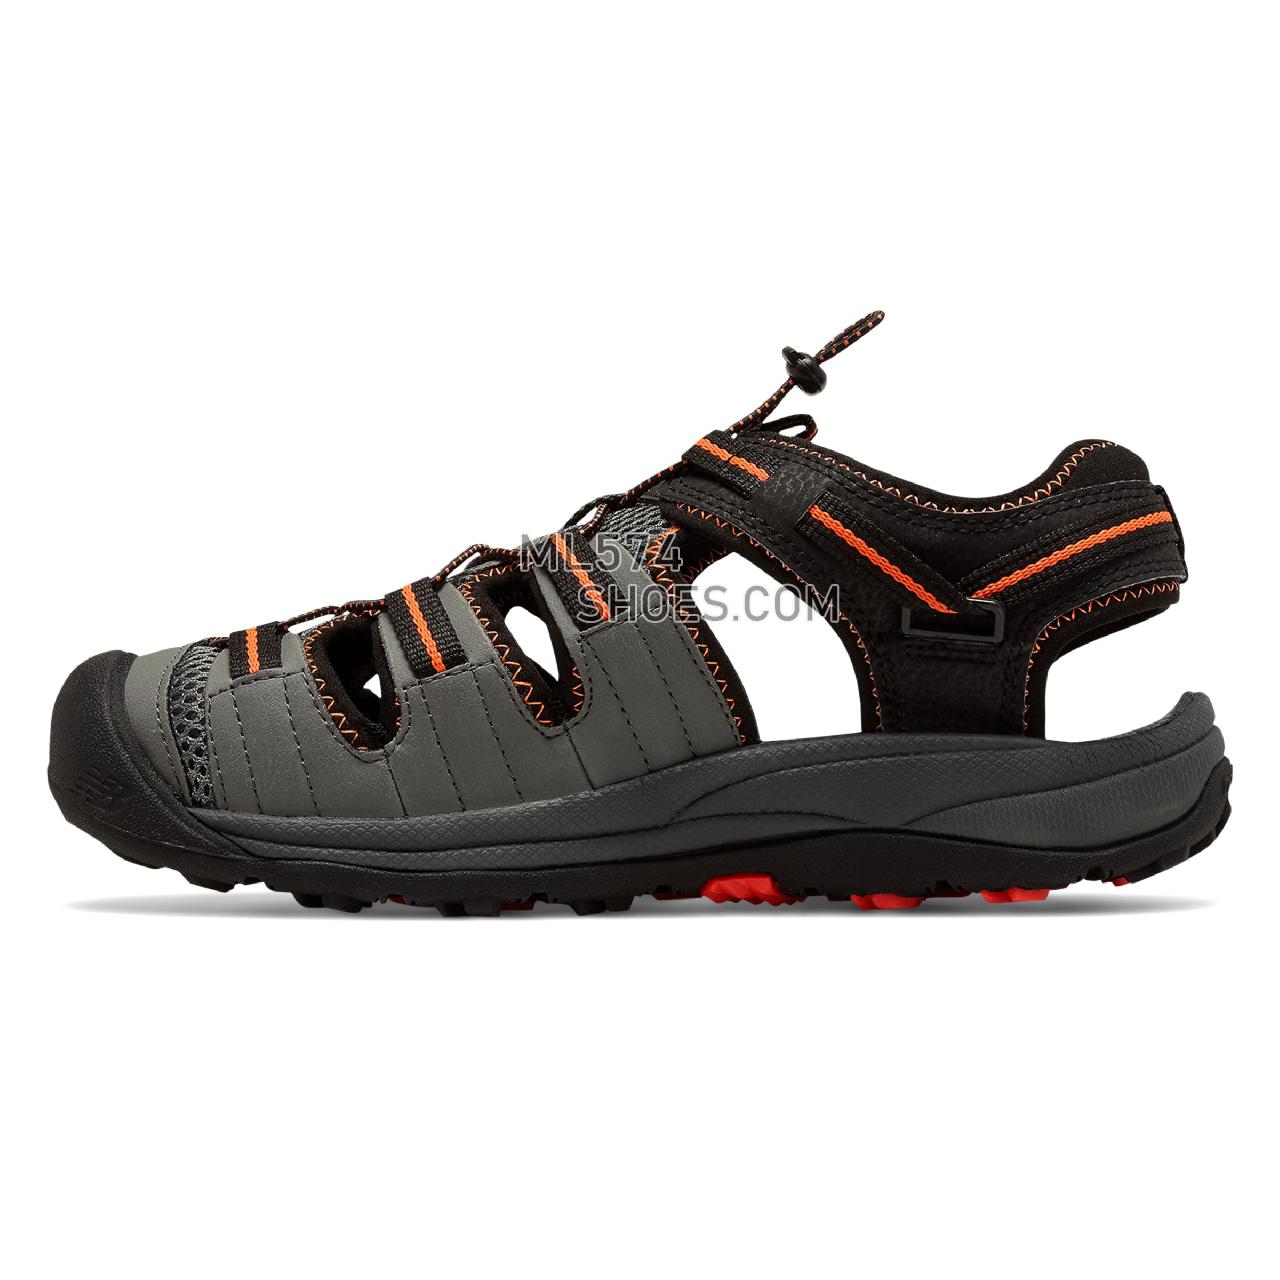 New Balance Appalachian Sandal - Men's 2040 - Sandals Black with Orange - M2040BON